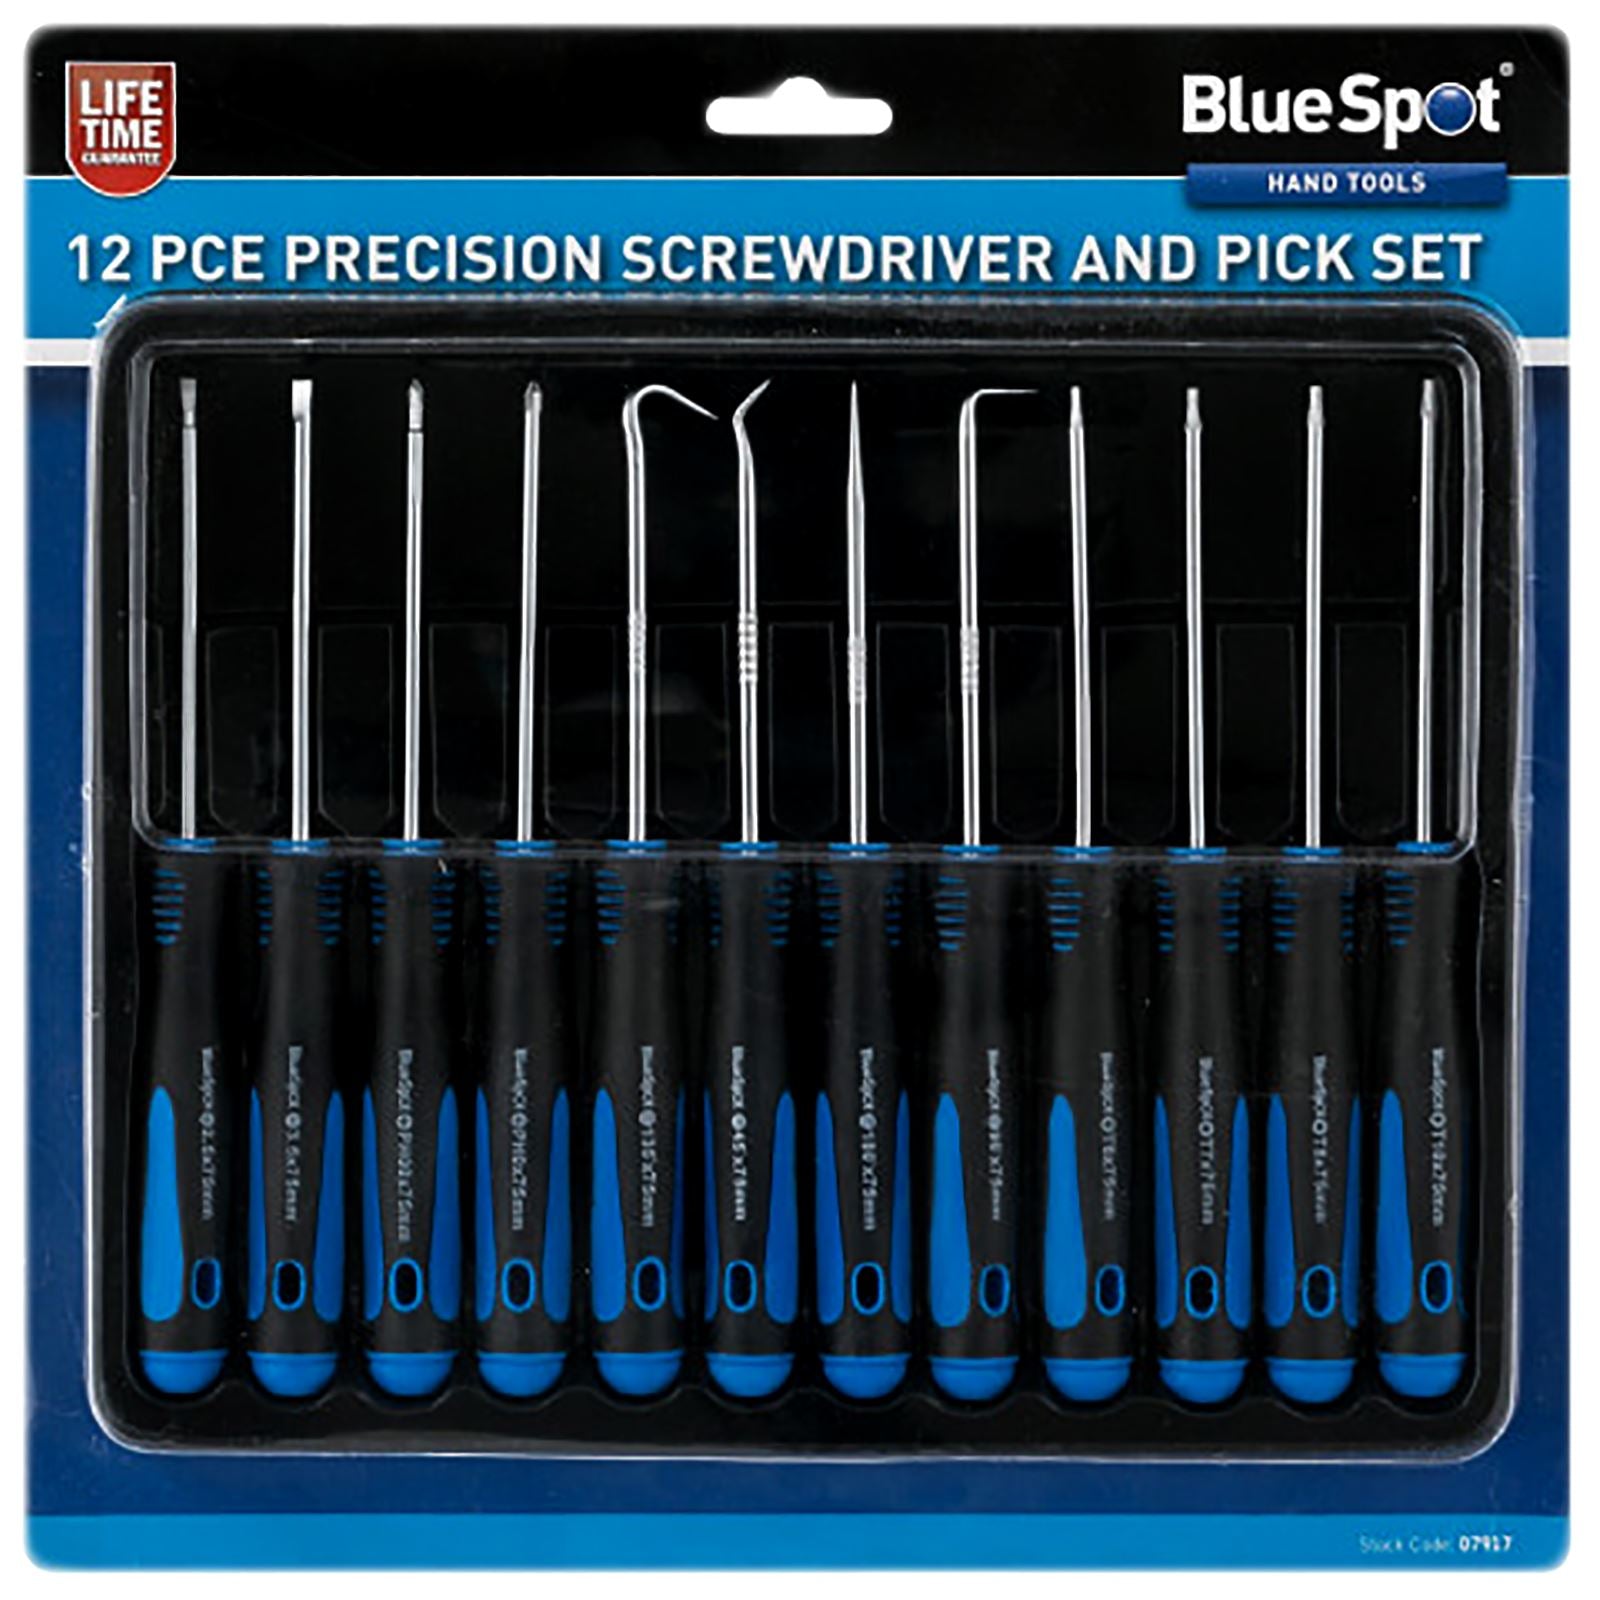 BlueSpot 12 Piece Precision Screwdriver and Pick Set